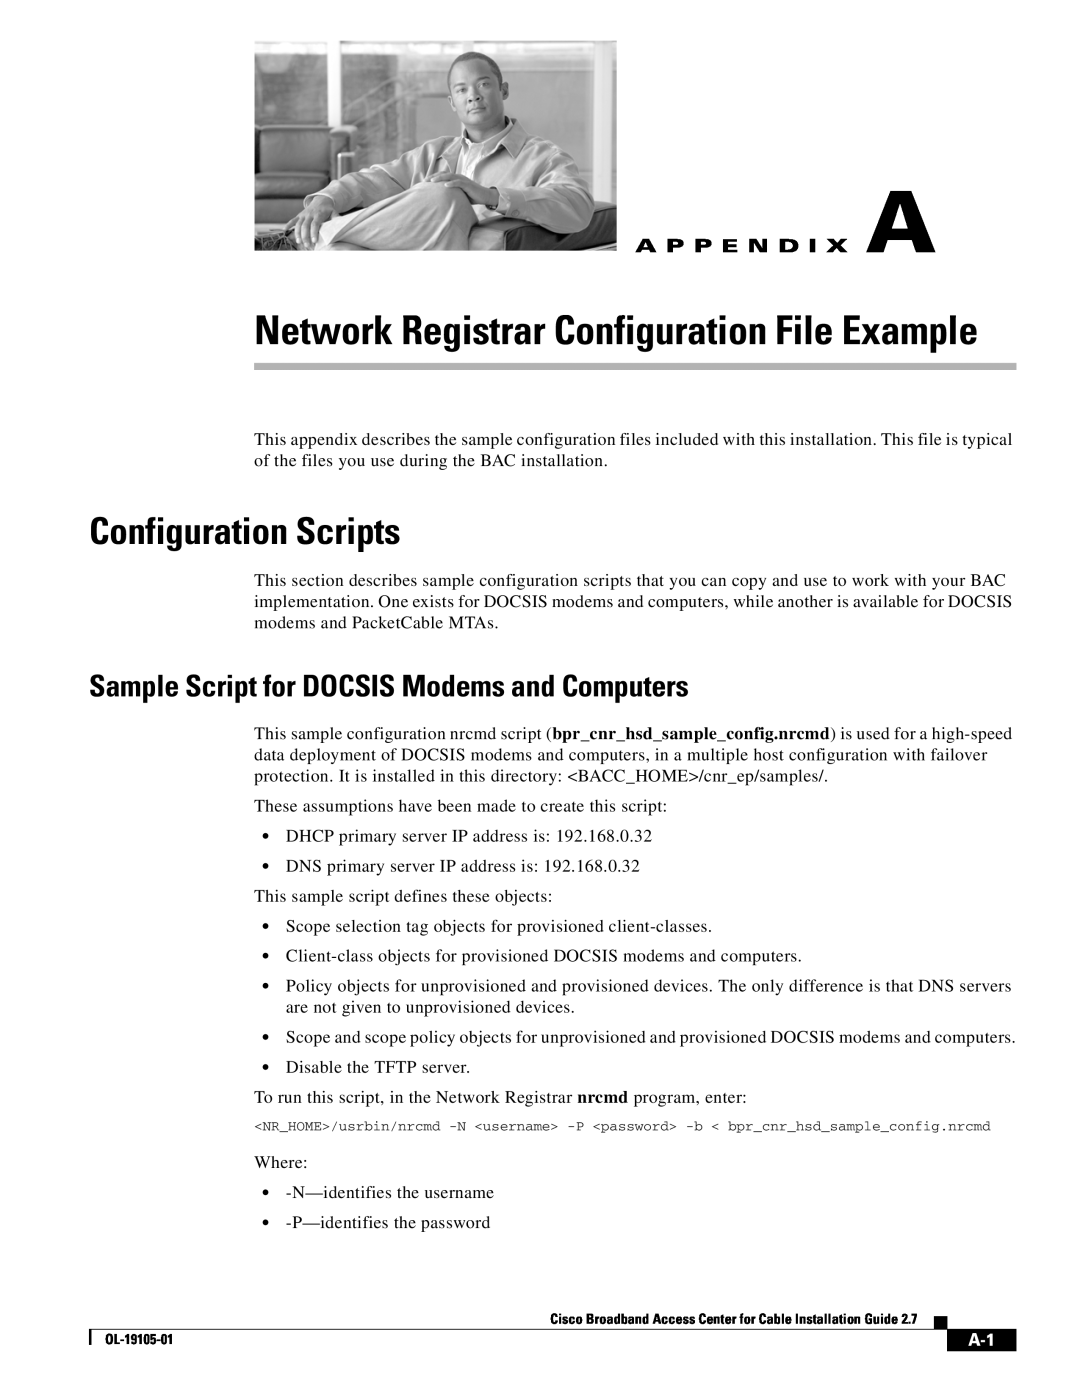 Cisco Systems Broadband Access Center manual Network Registrar Configuration File Example, Configuration Scripts 